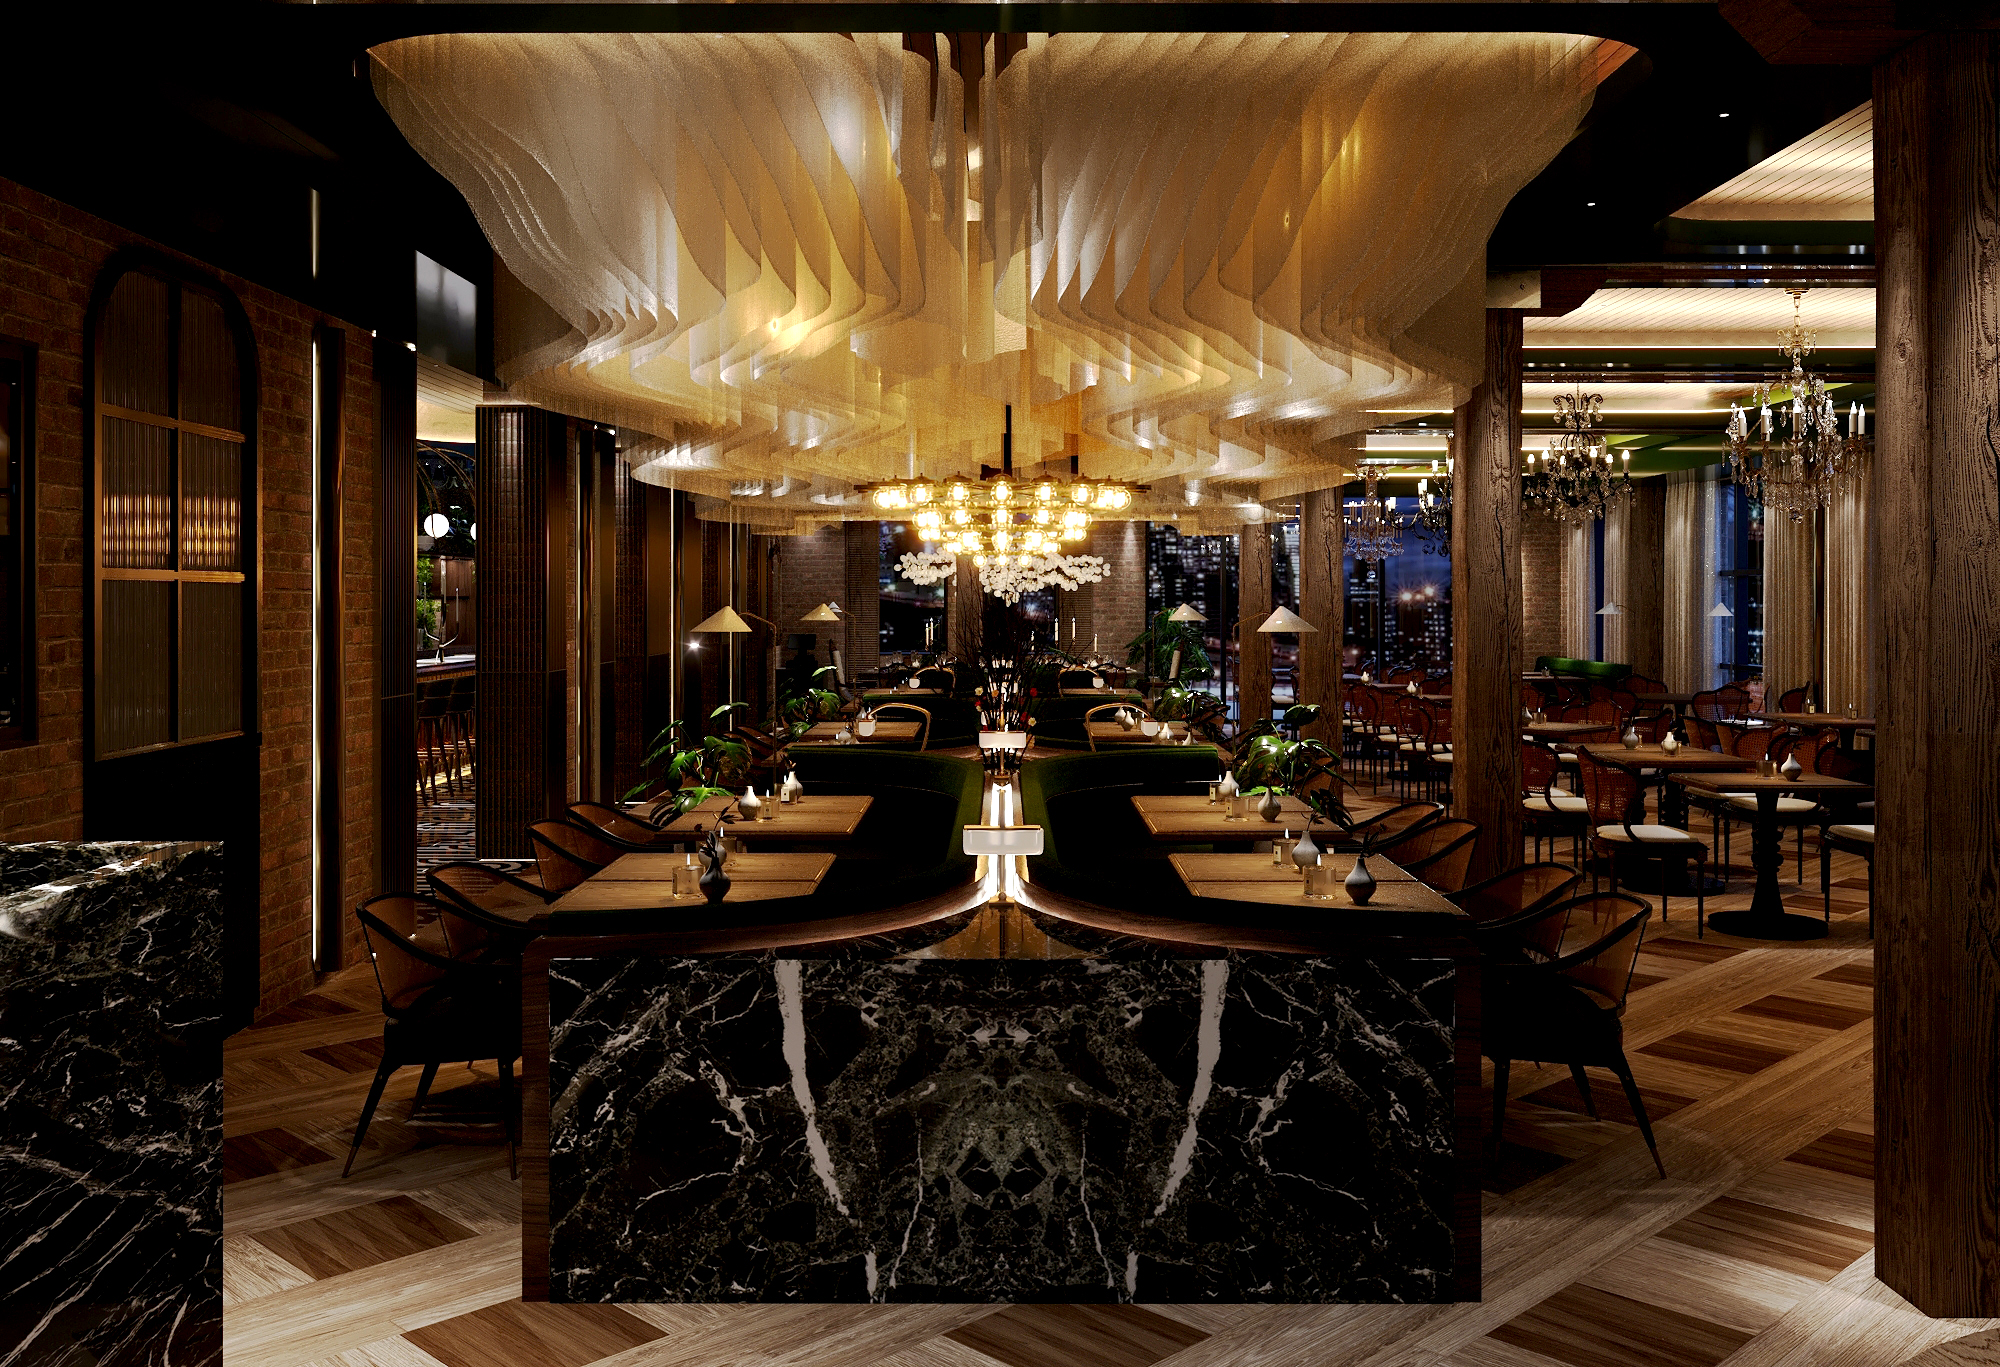 Kent restaurant - restaurant interior design ideas concept